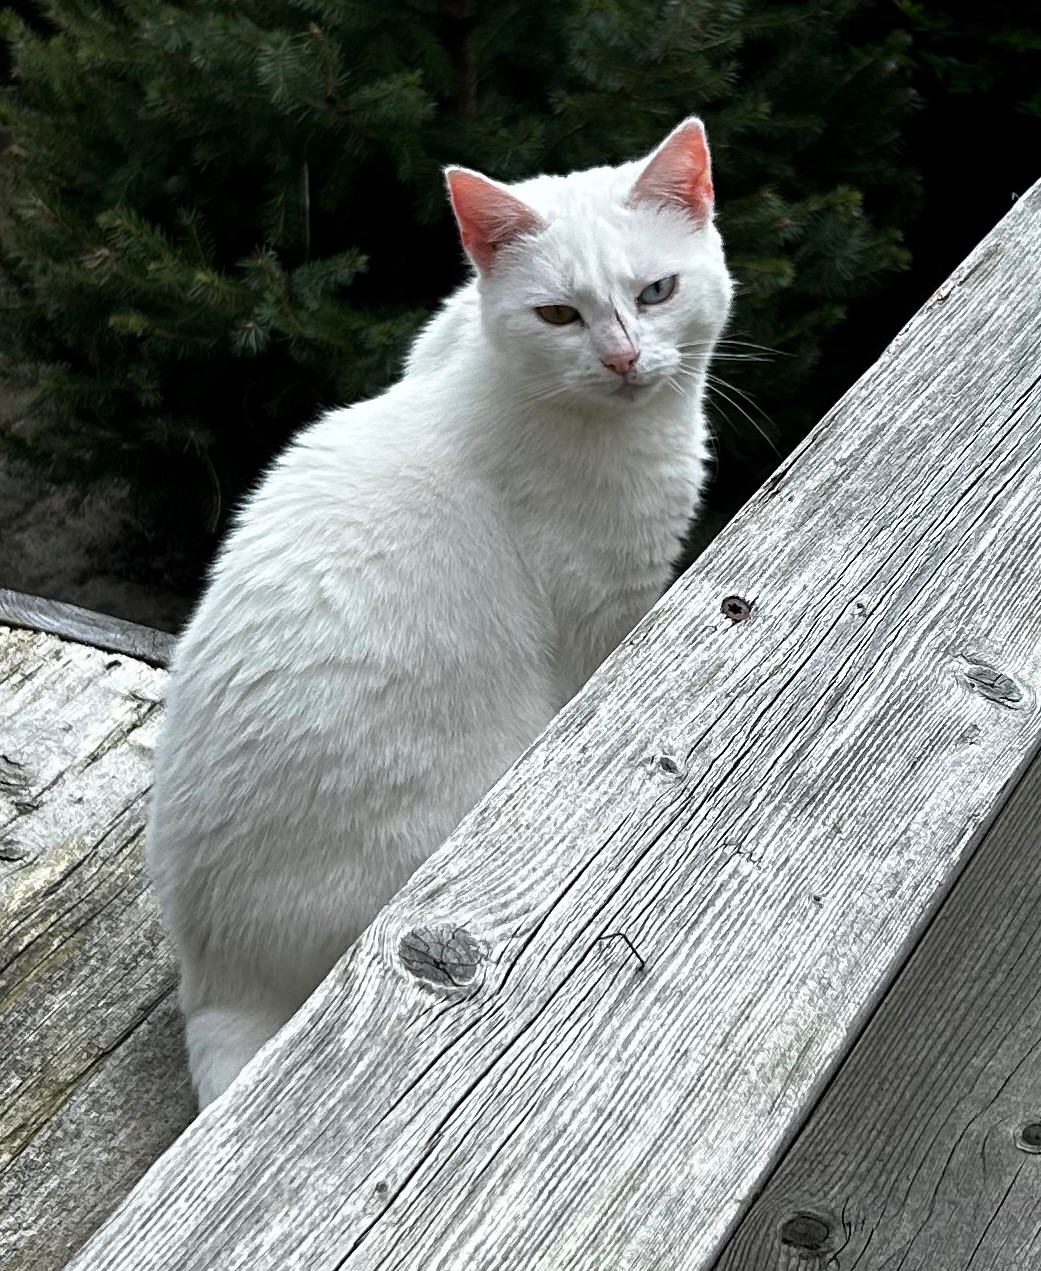 Witte kat (eigenaar bekend)